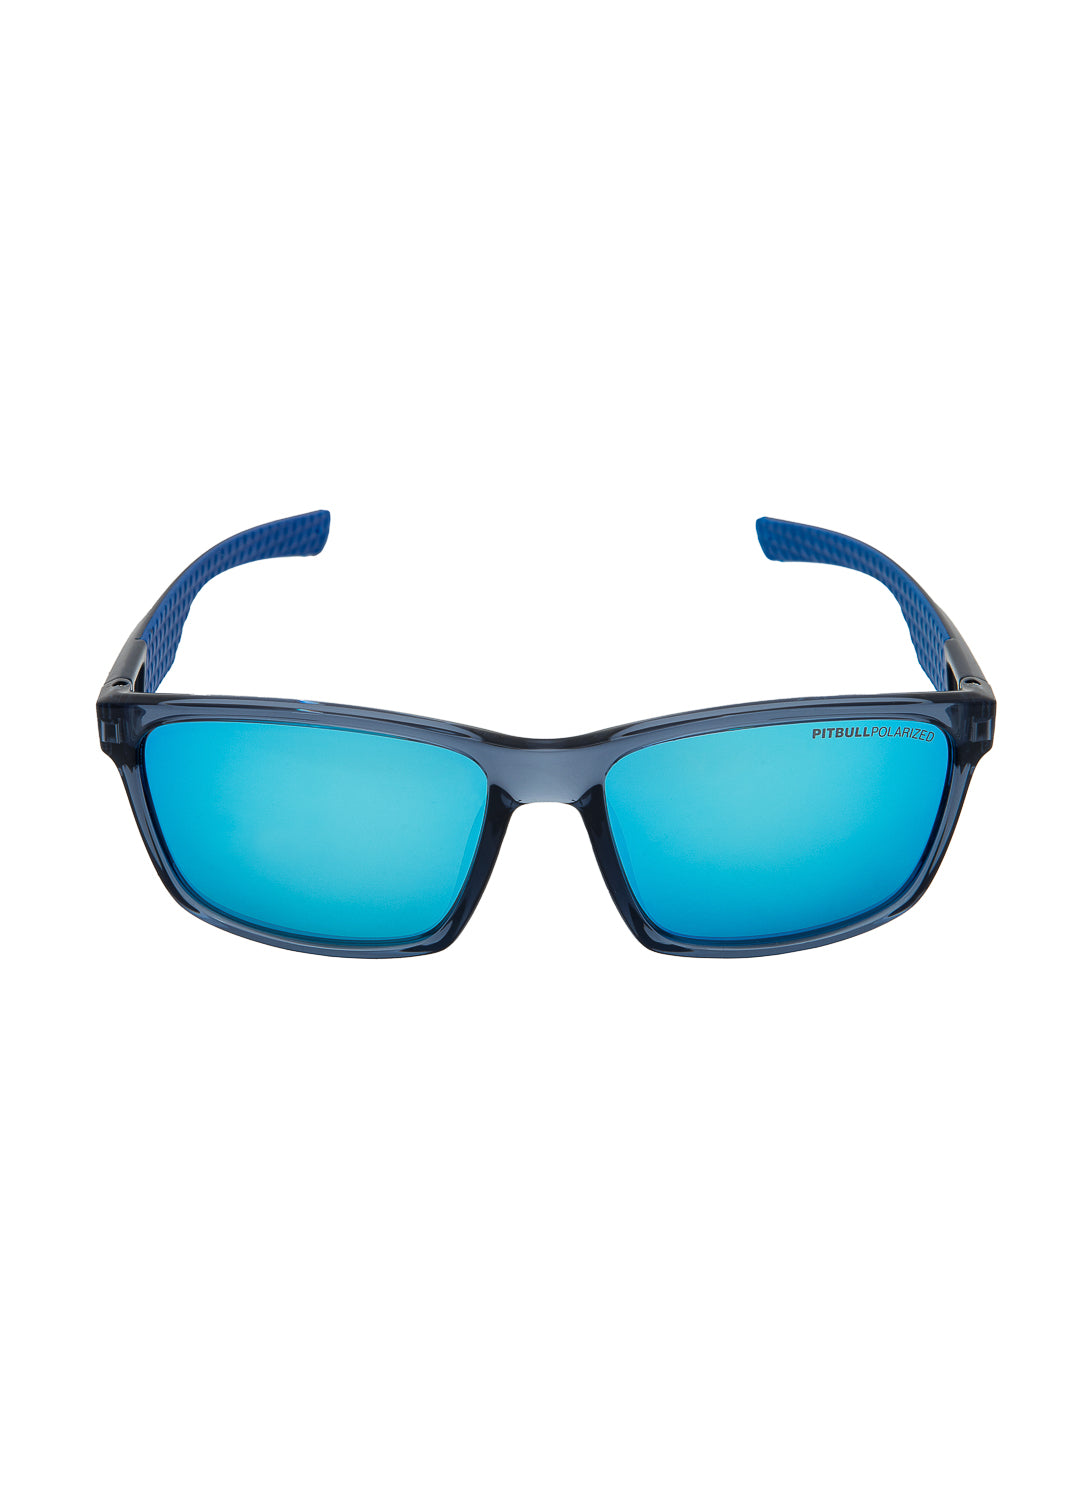 Sunglasses Grey/Blue SANTEE.